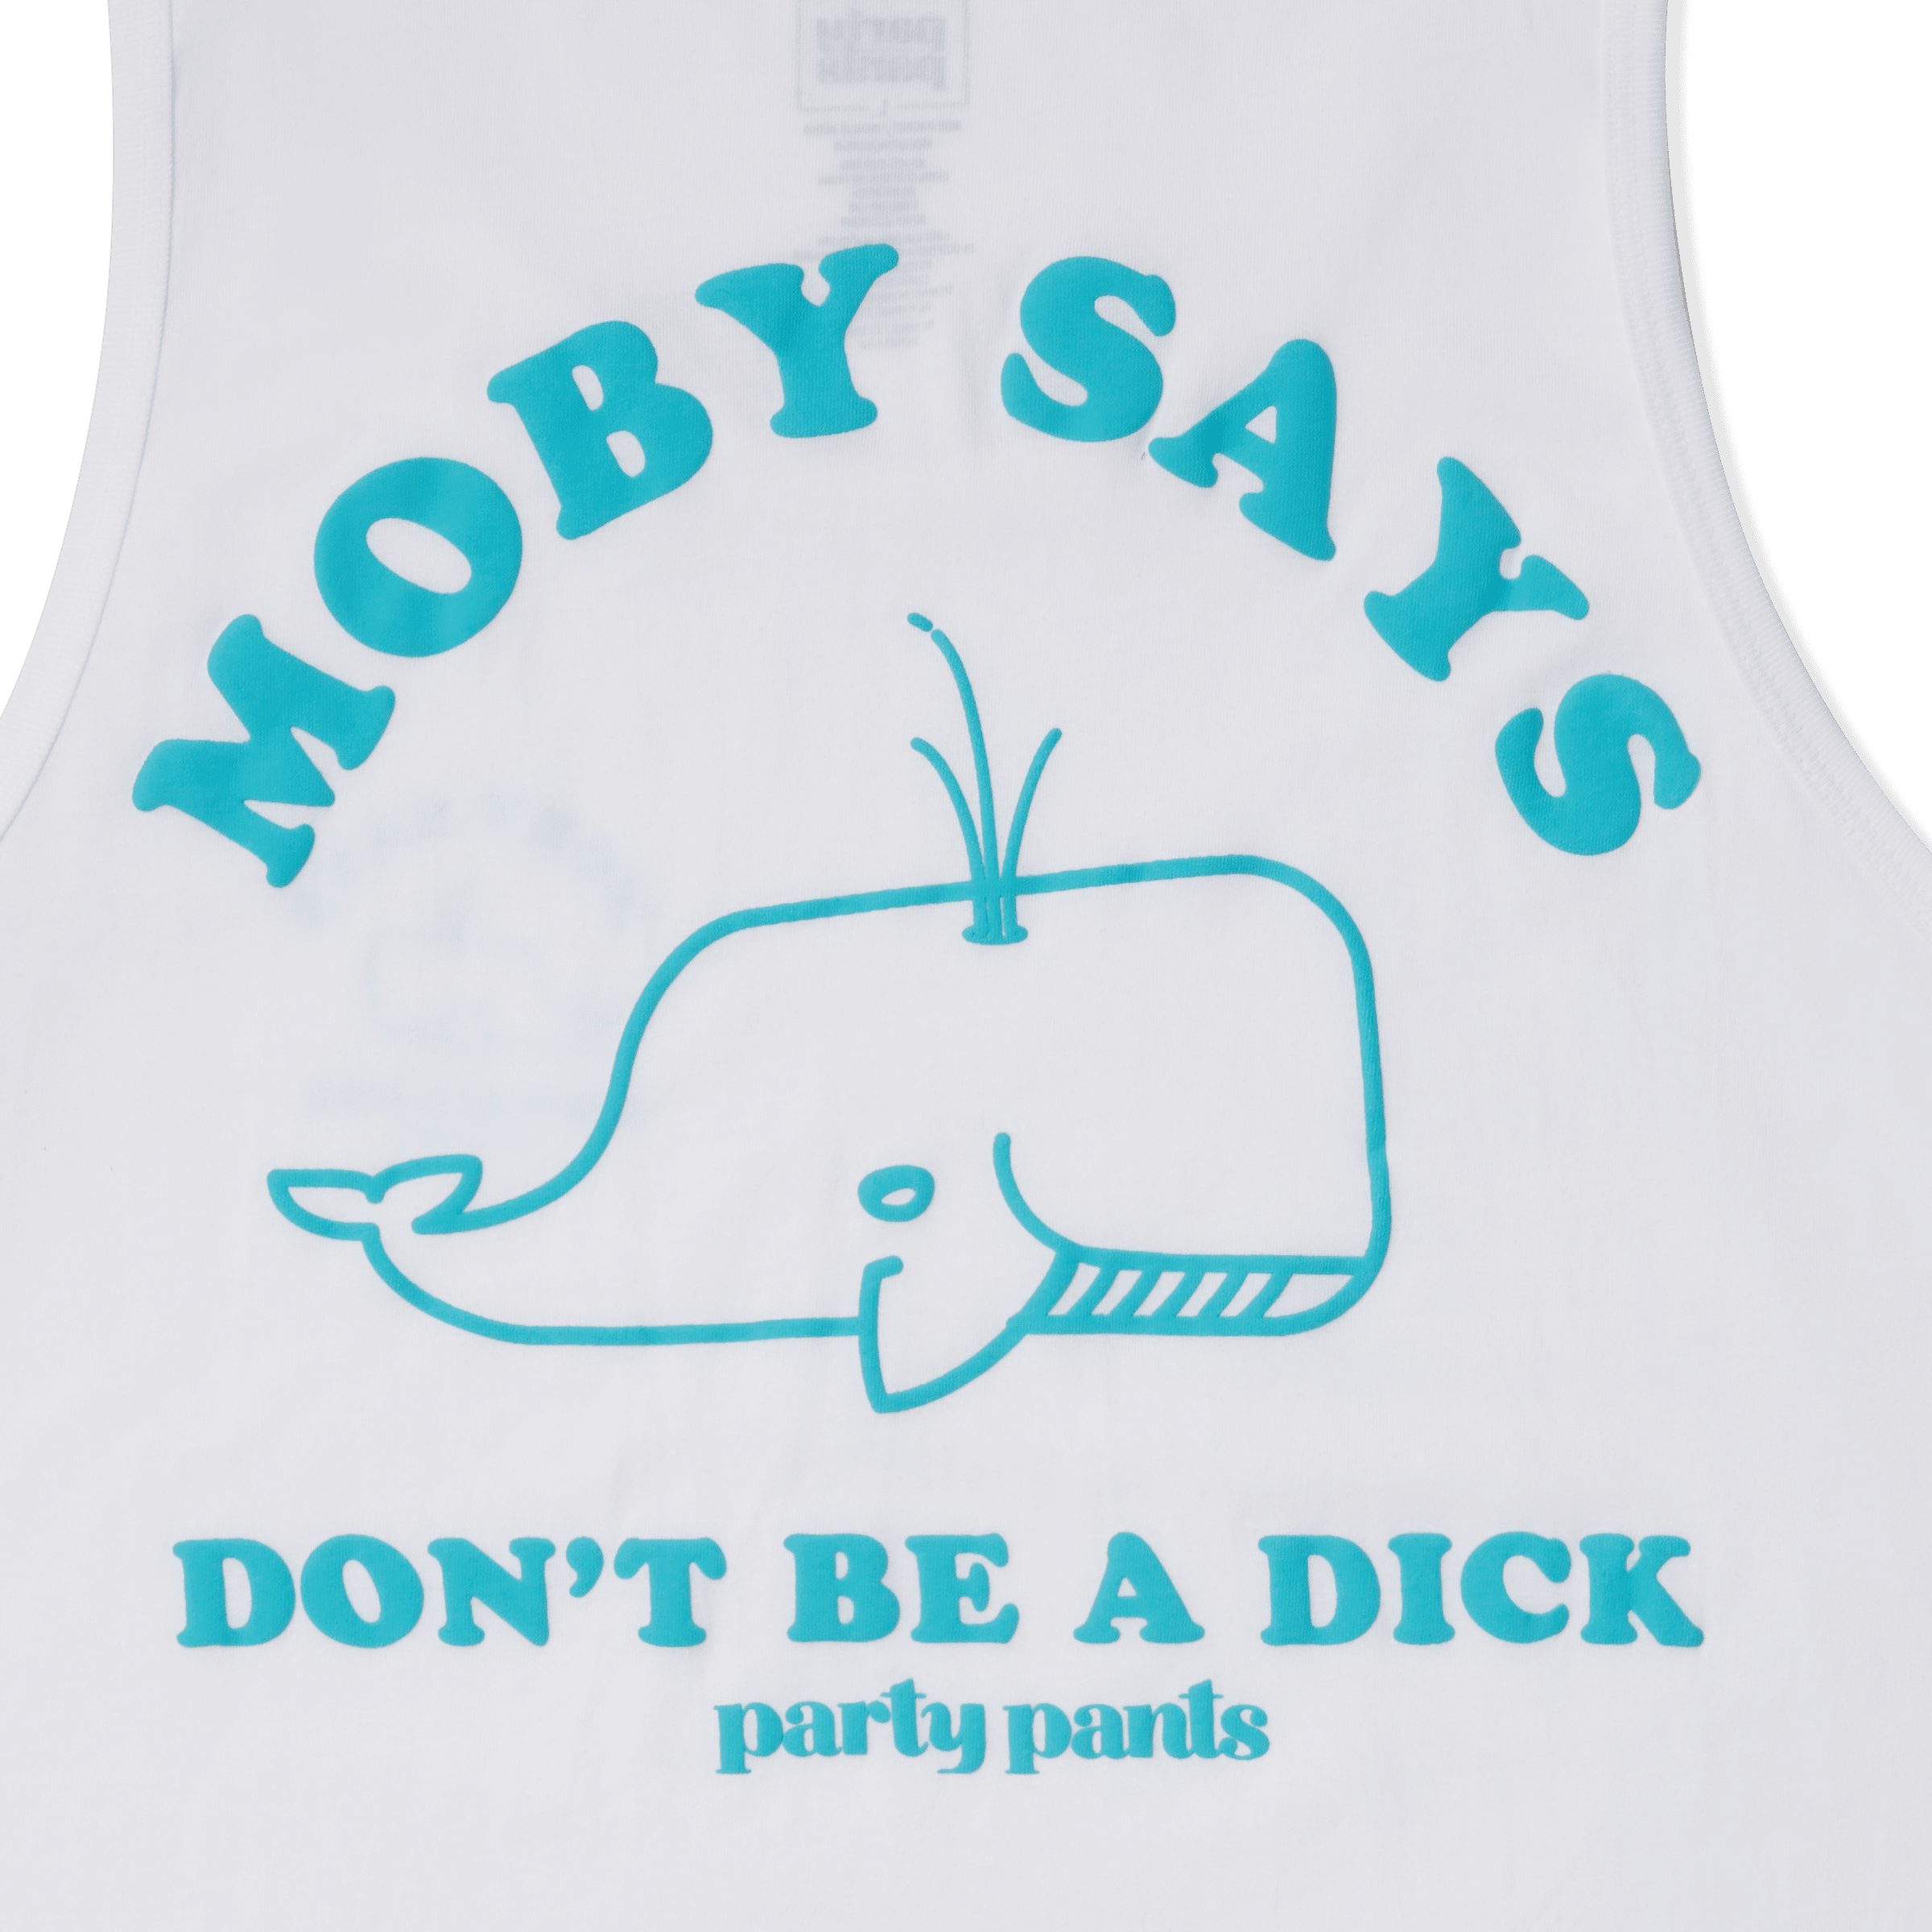 MOBY SAYS TANK - WHITE TANK PARTY PANTS 